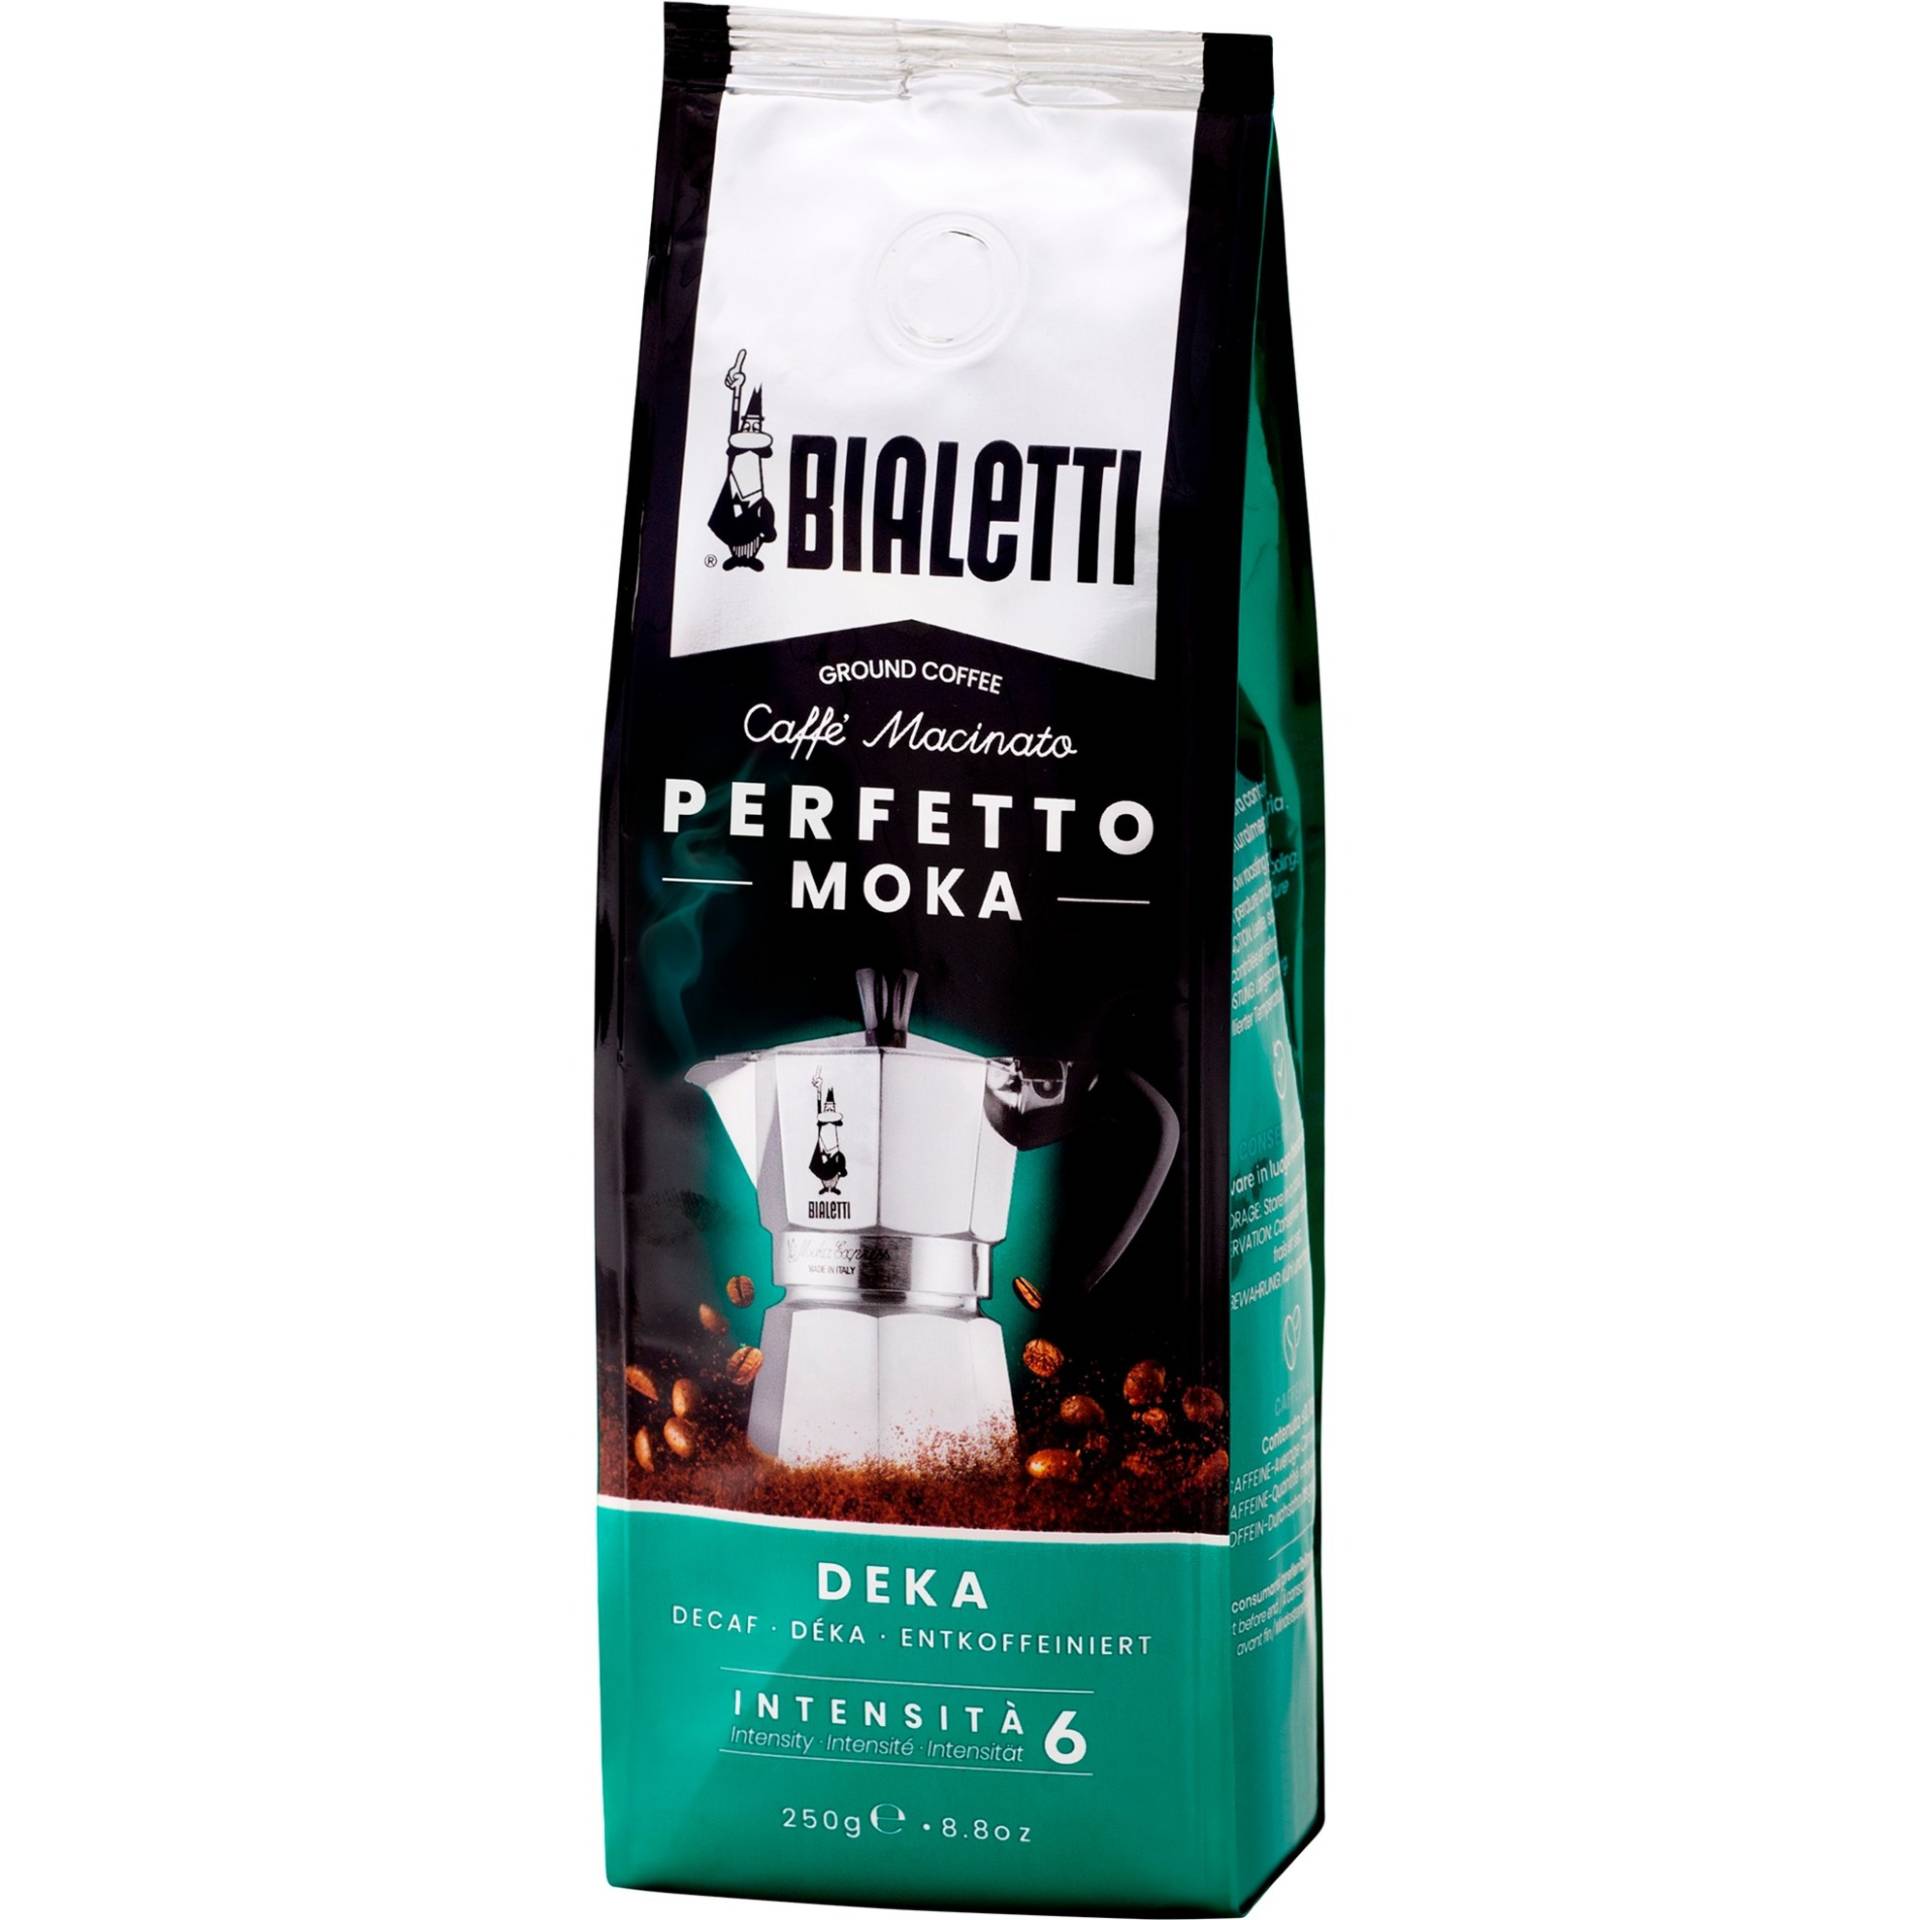 Perfetto Moka Deka (Decaf), Kaffee von Bialetti